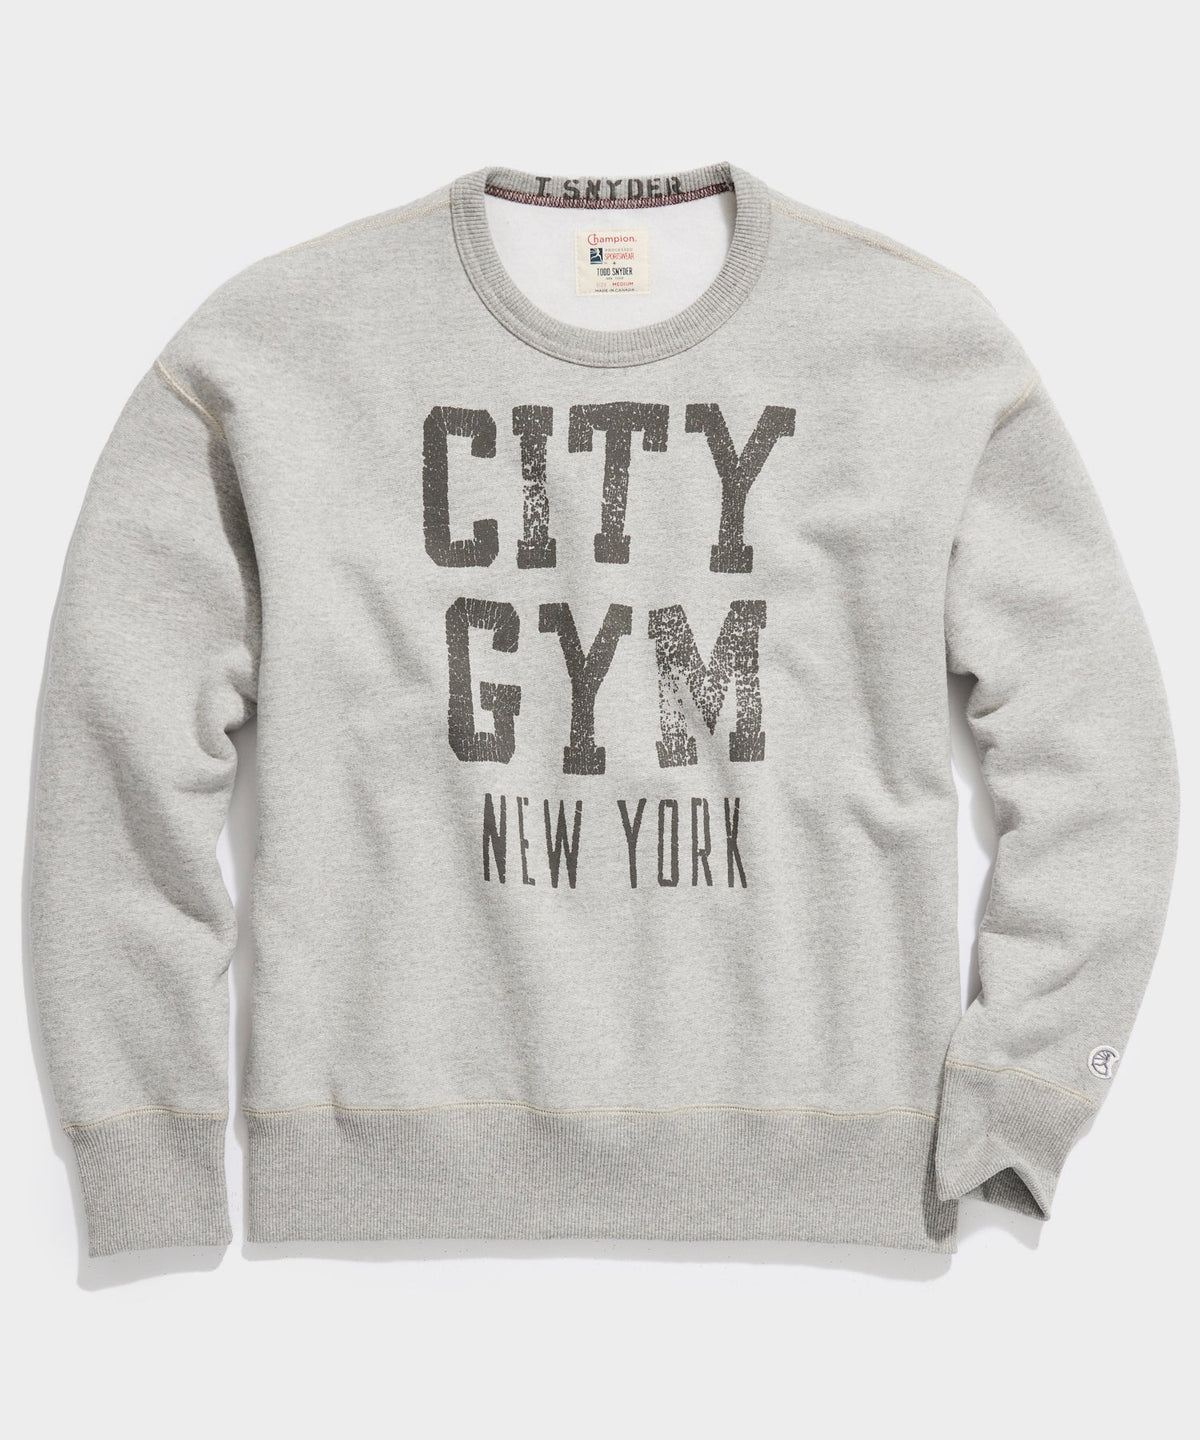 Champion City Gym Sweatshirt in Grey Mix